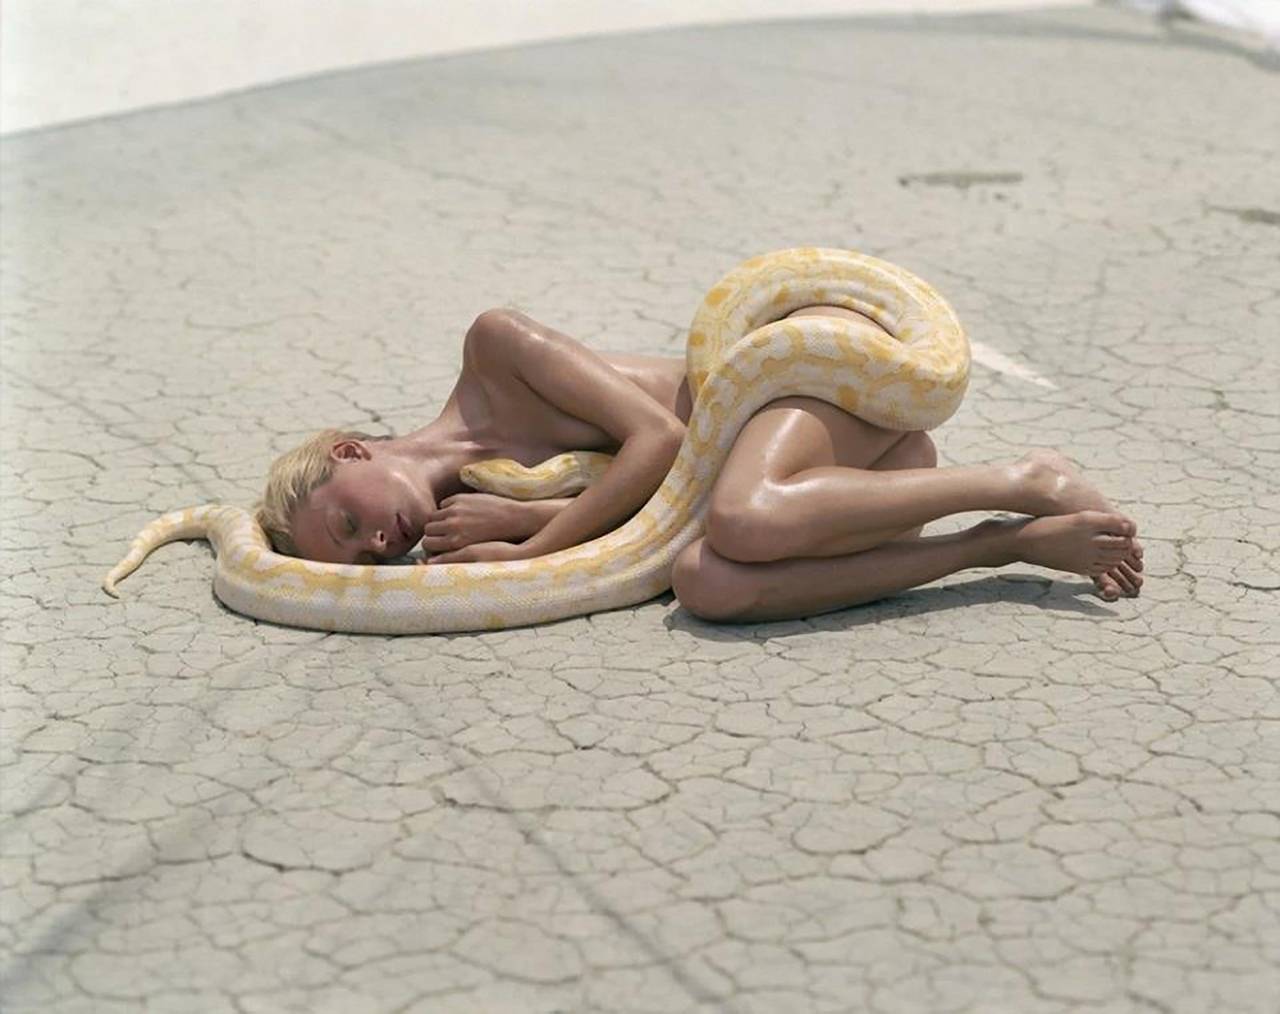 Beauty & Beast - Tatjana Patitz with snake, fine art photography, 1996